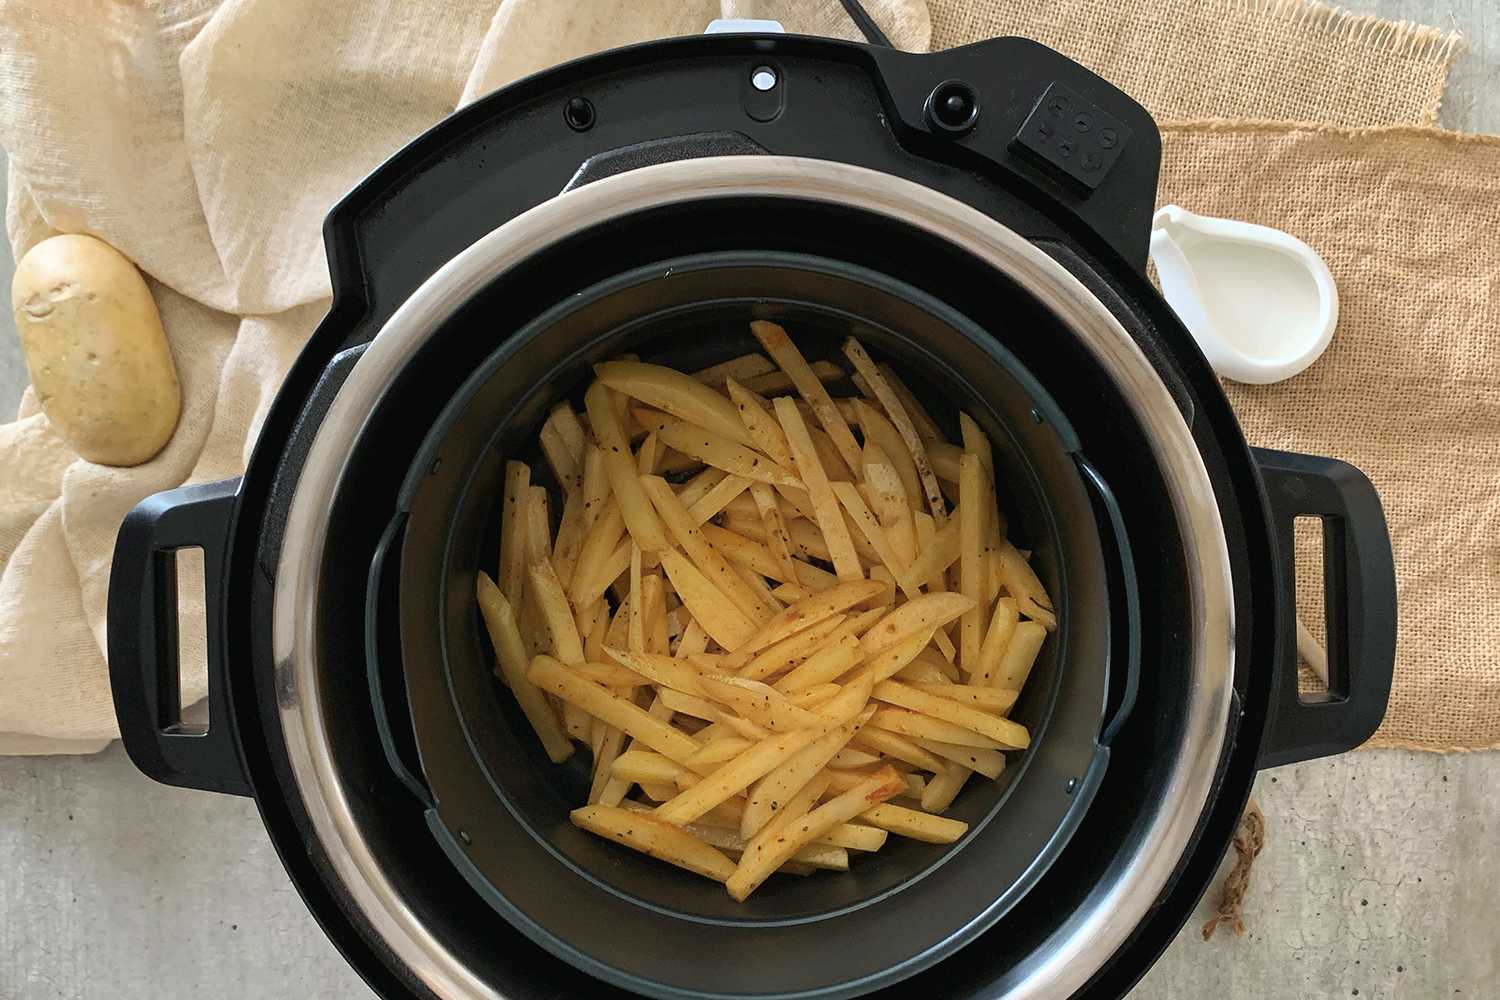 Instant Pot Air Fryer Lid Review - Corrie Cooks